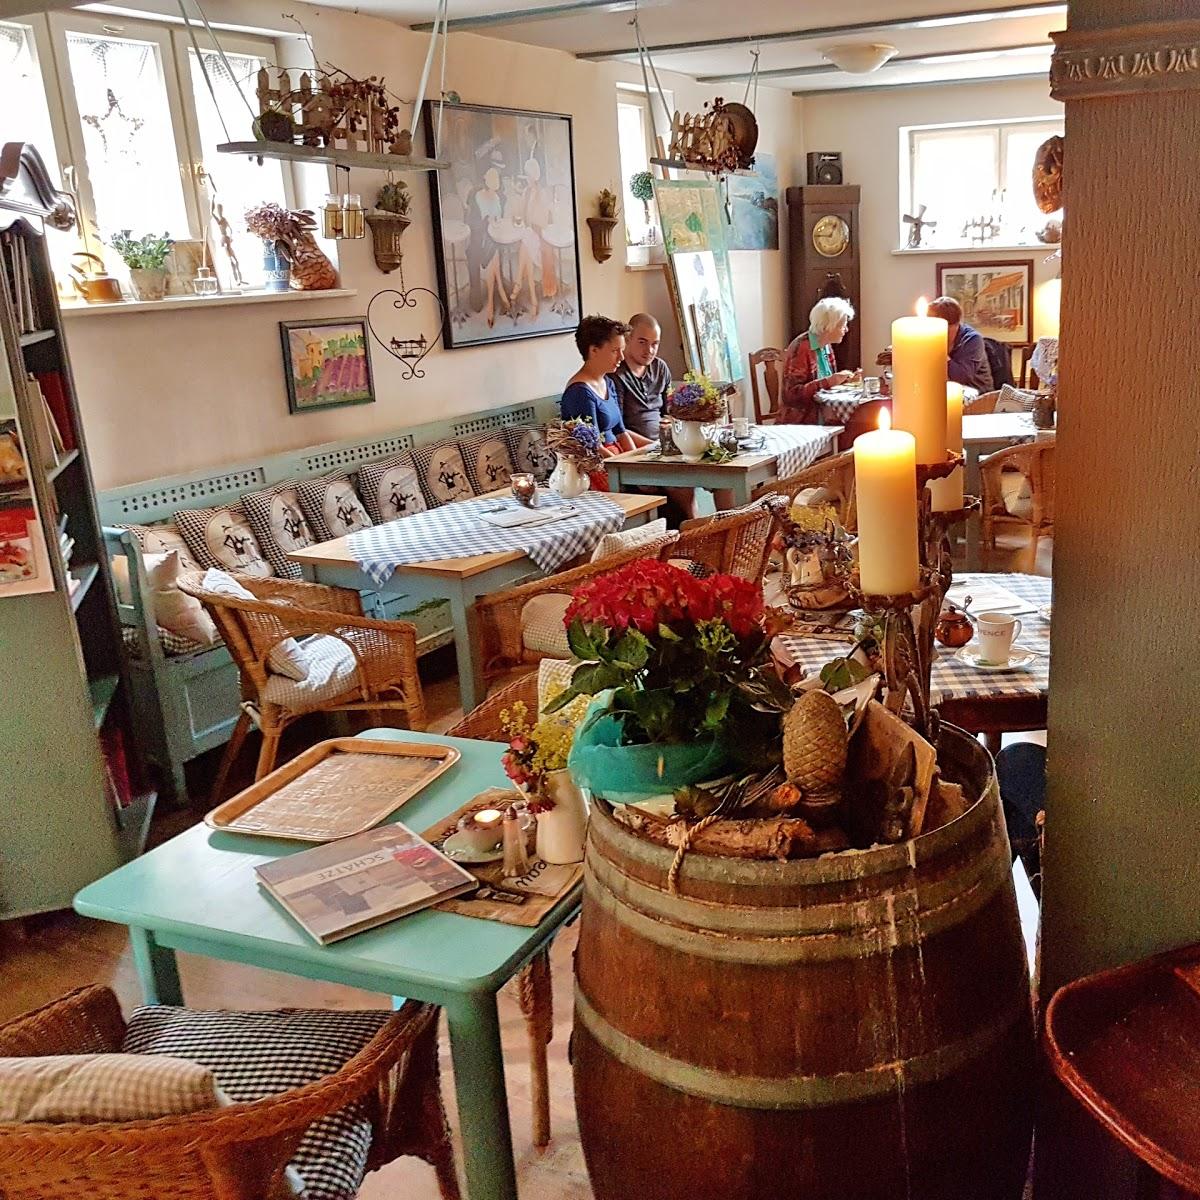 Restaurant "Wecklies Bio Café & Bistro" in Bad Oldesloe